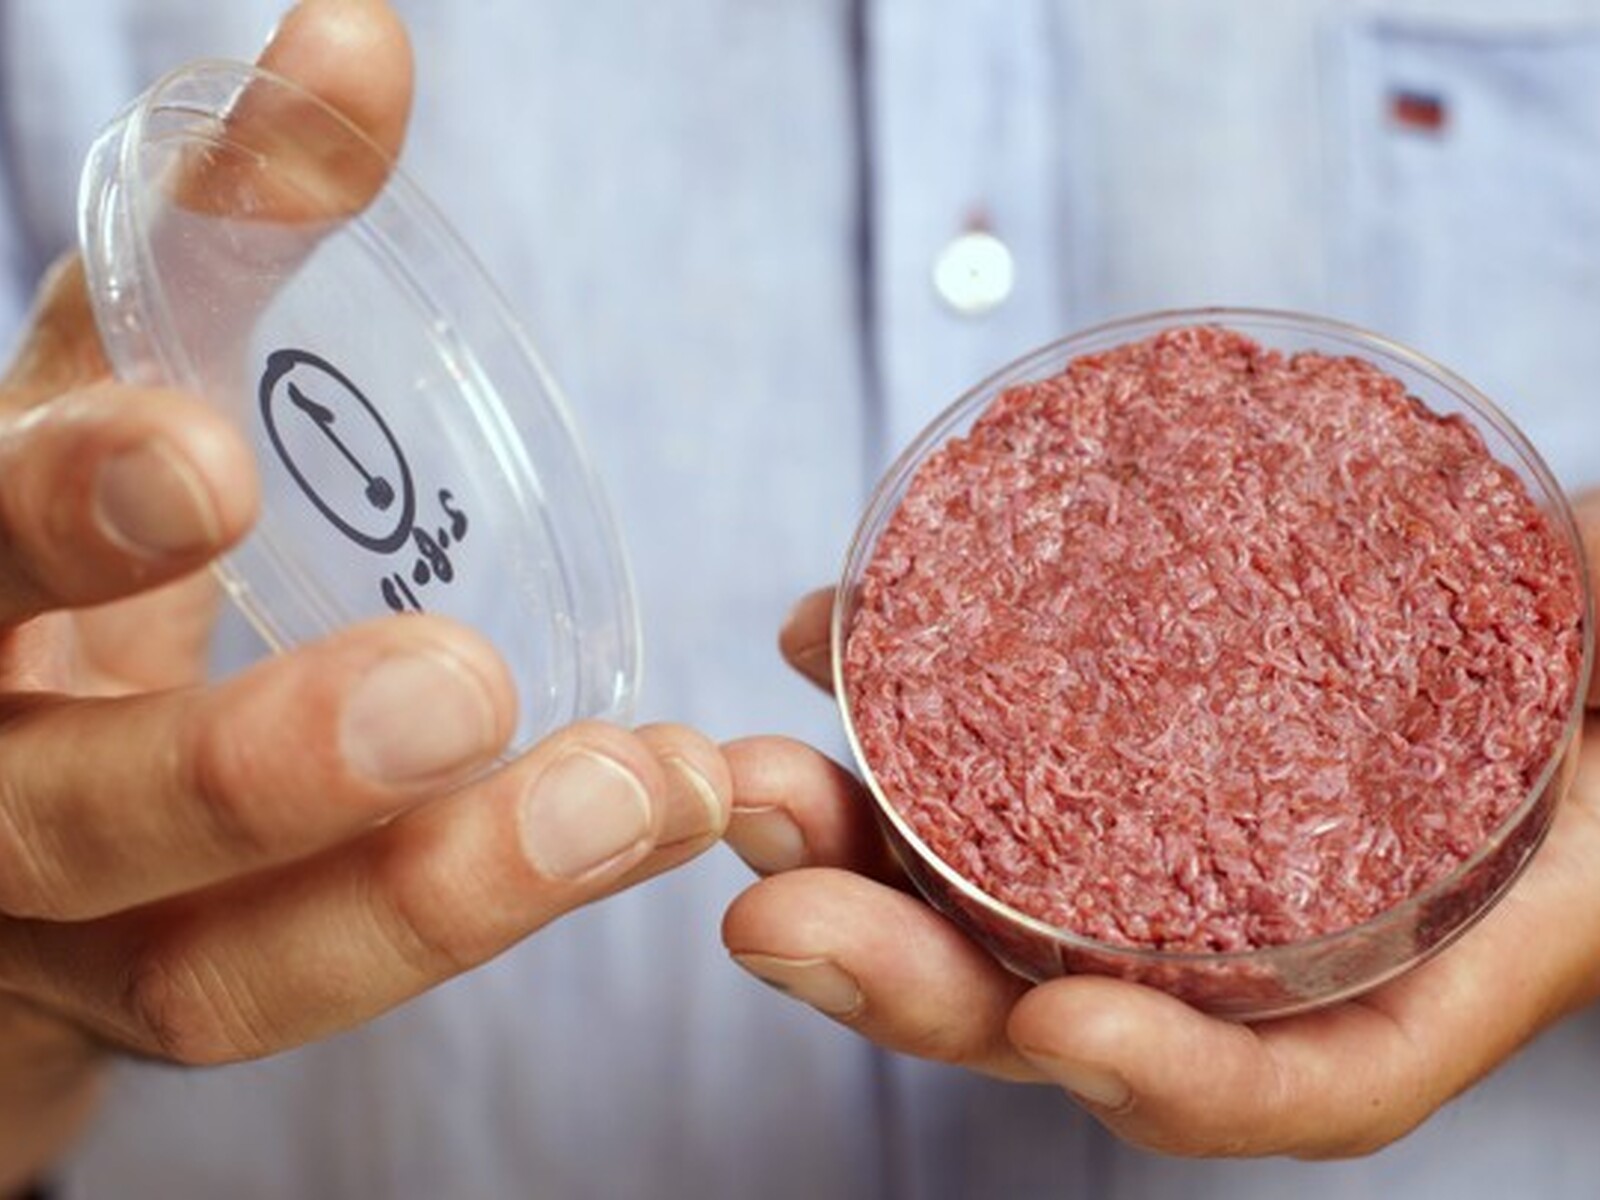 Florida Bans Lab-Grown Meat